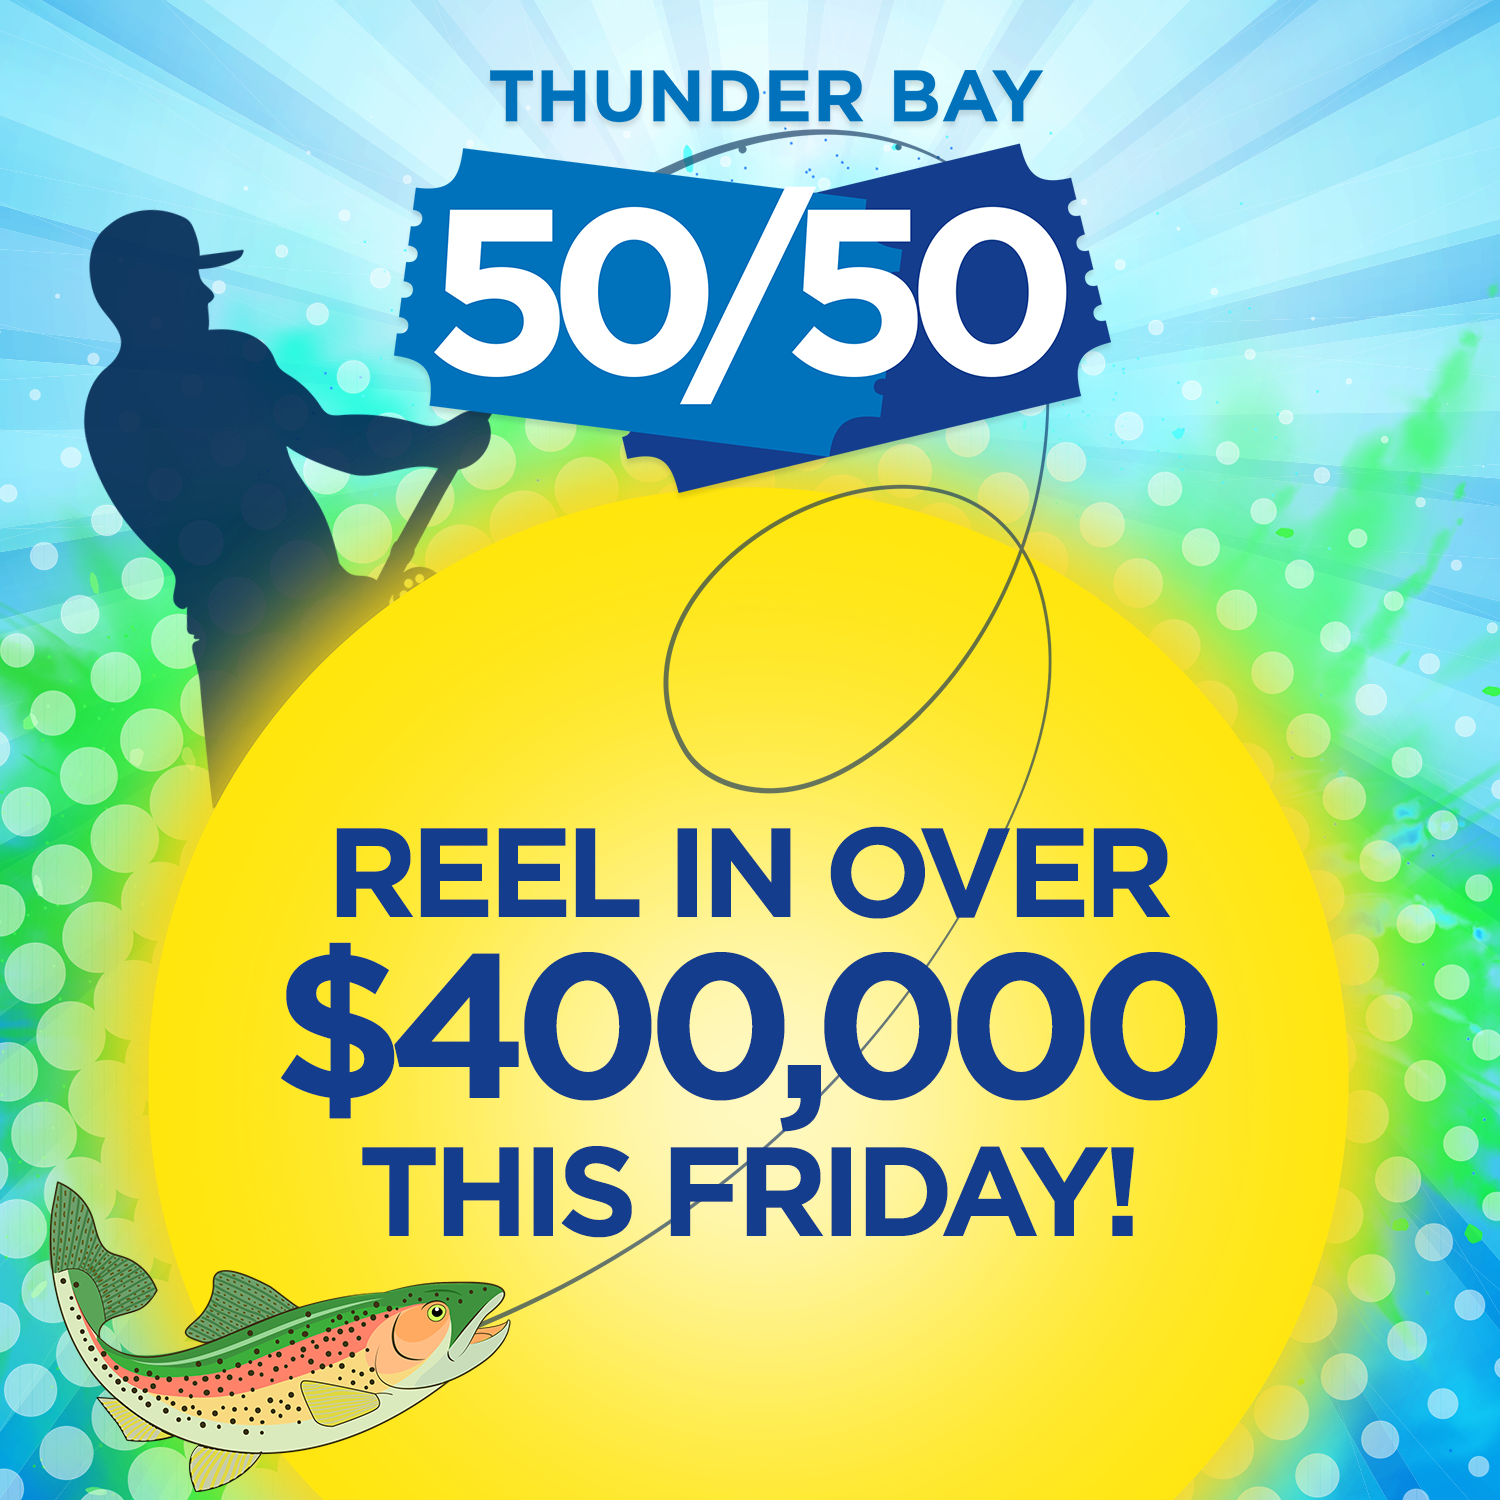 Thunder Bay 50/50: Over $400,000 Will Be Won on Friday!